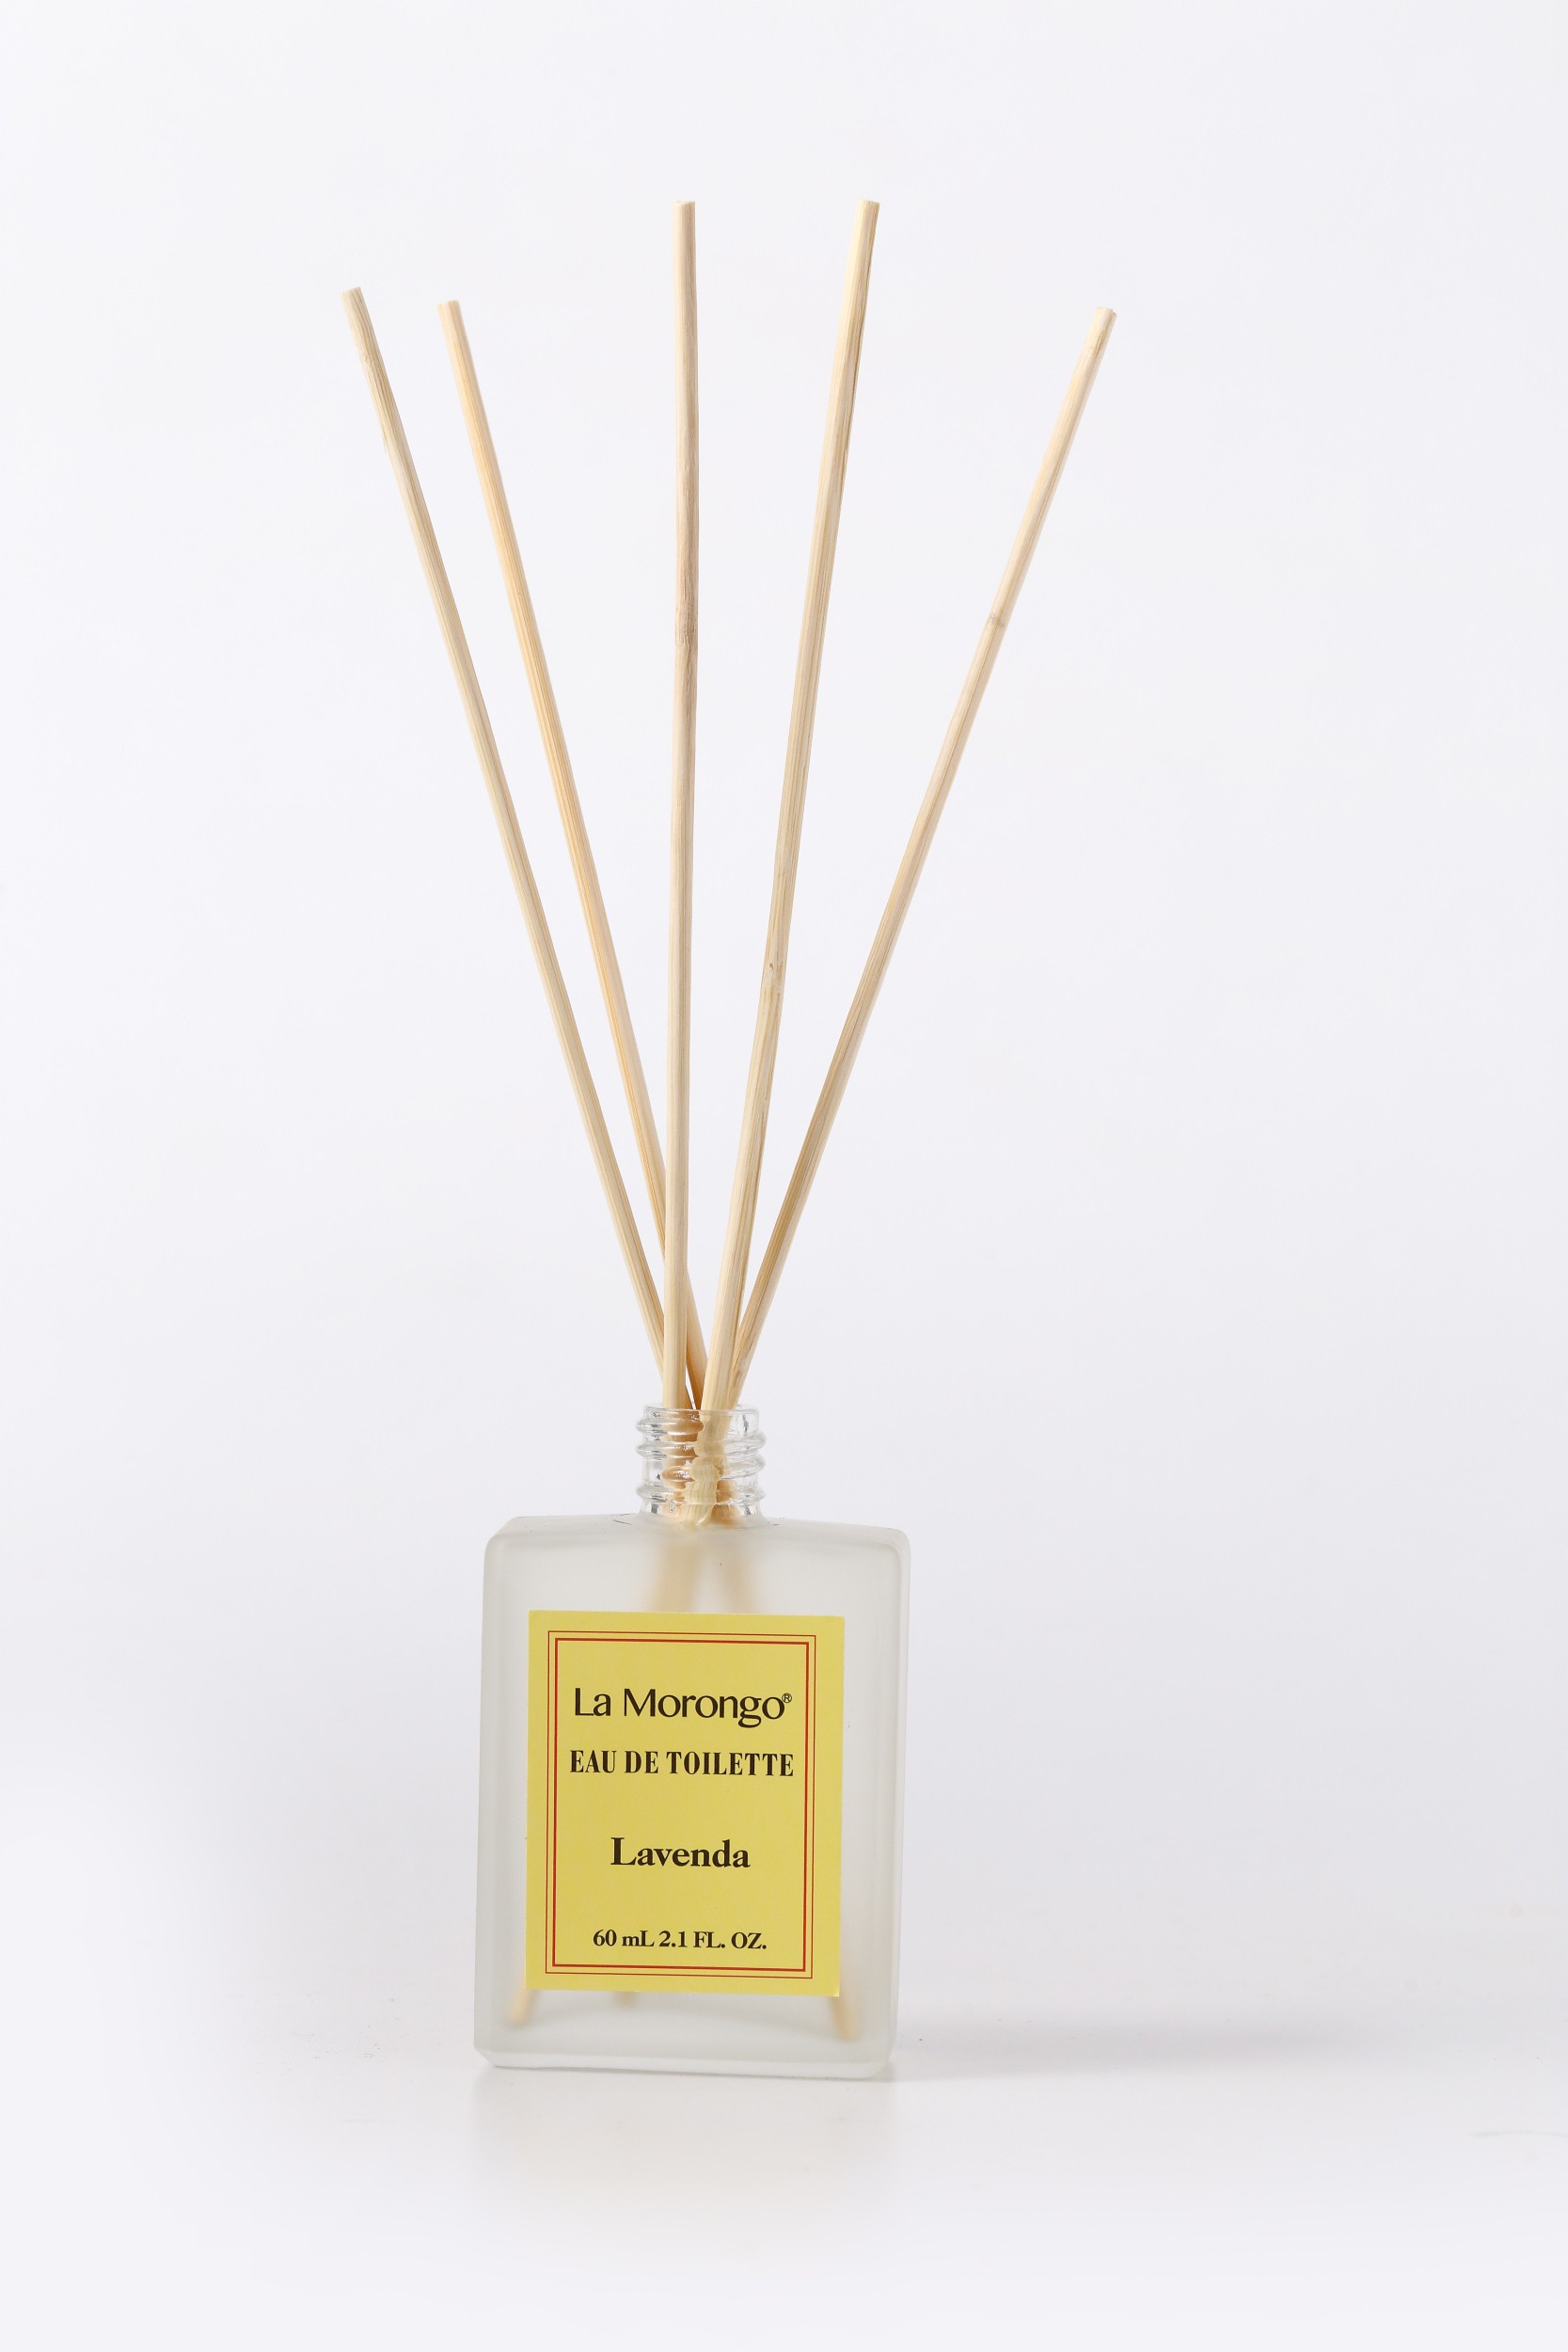 (法國樂木美品) Lavenda bamboo reed diffuser 黃標普羅旺斯薰衣草精油香氛噴霧擴香竹 60mL 一瓶Classic Fragrance Spray,Gentle Scent,Nature,Relax